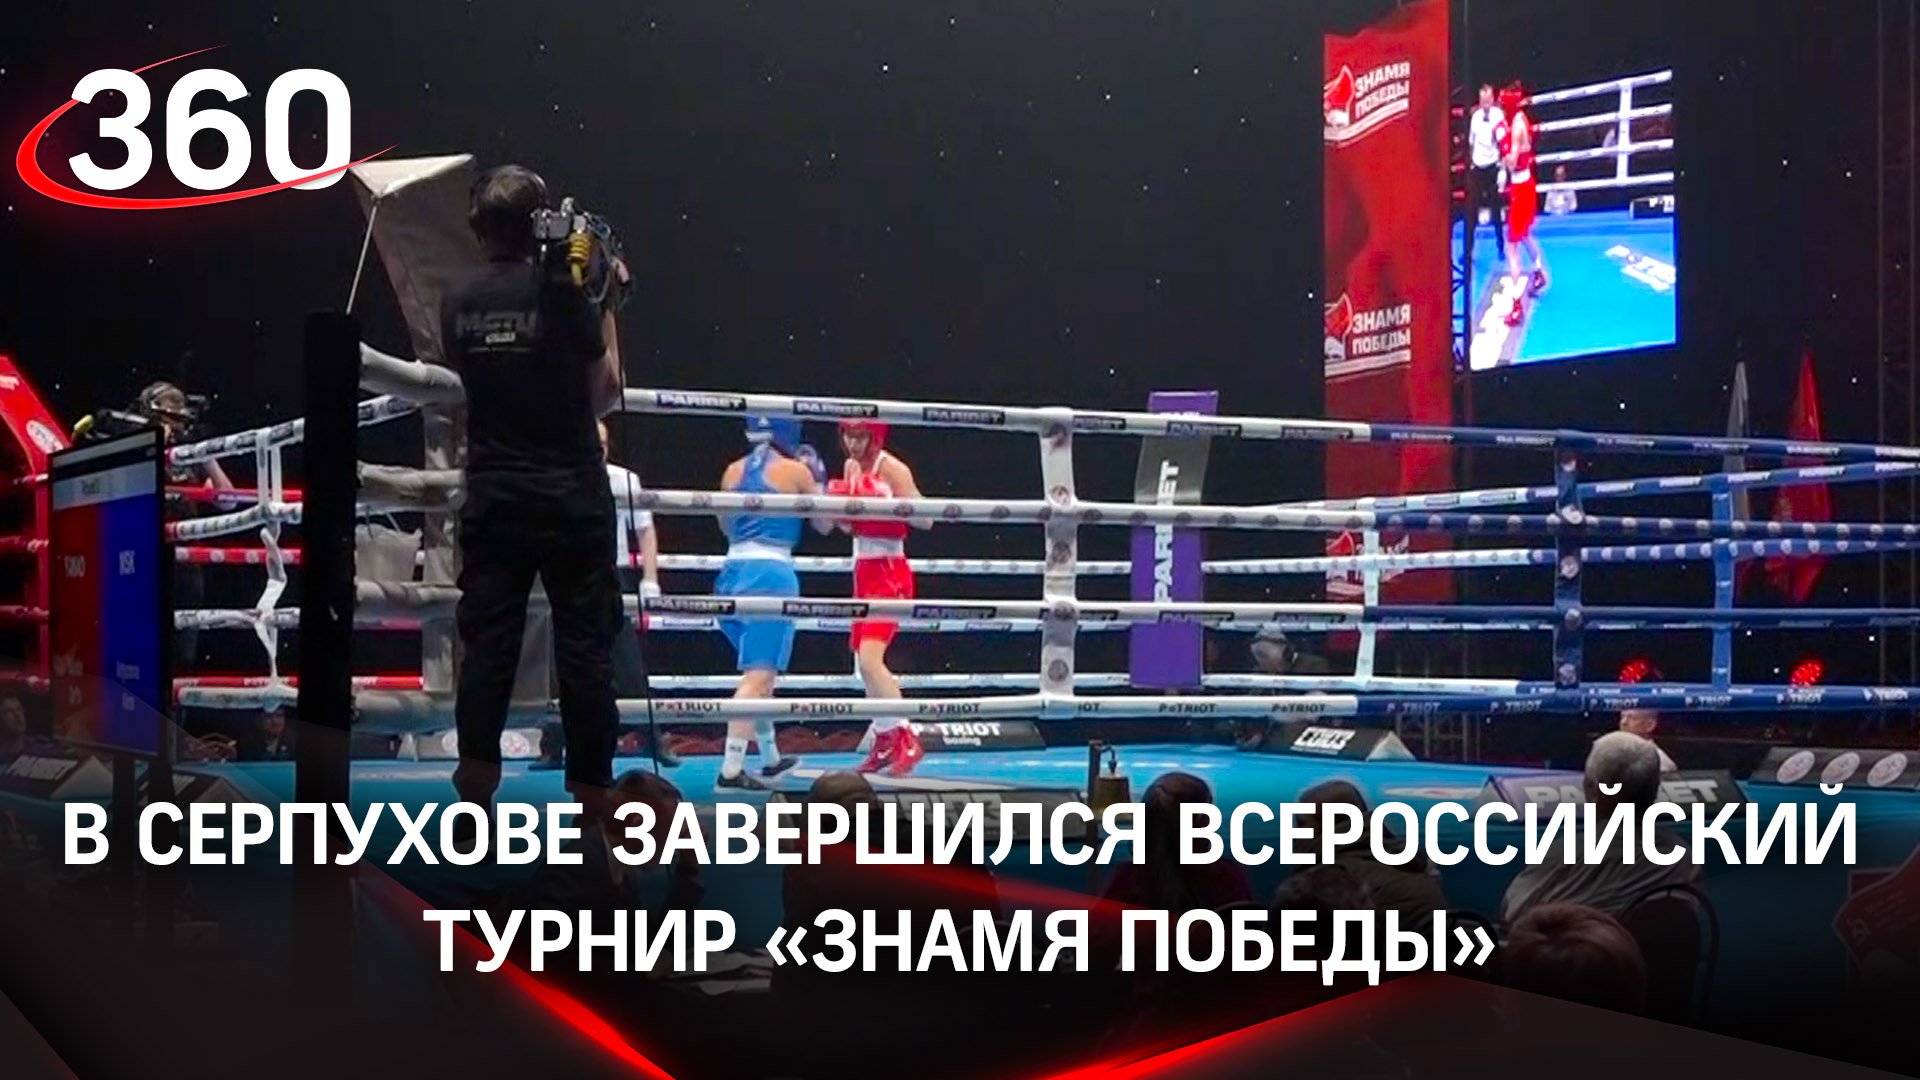 Федерация бокса зовёт всех на Остров Русский в Серпухове - на фестиваль, где будут Бузова и Гурцкая